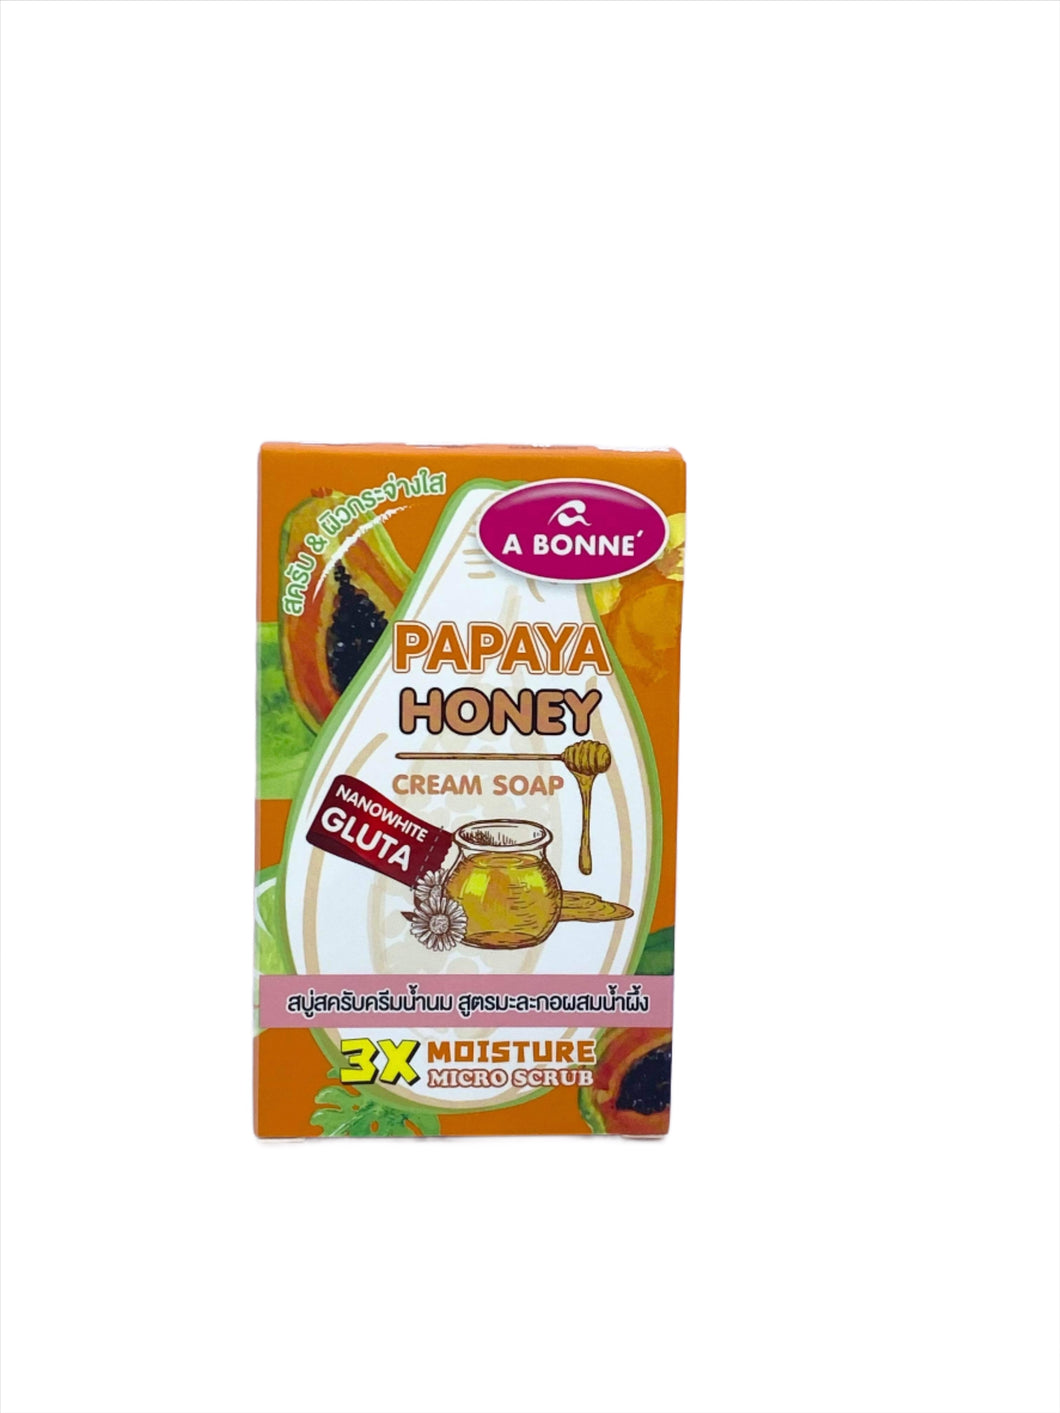 A Bonne Papaya honey Cream Soap 💯 Authentic Thailand